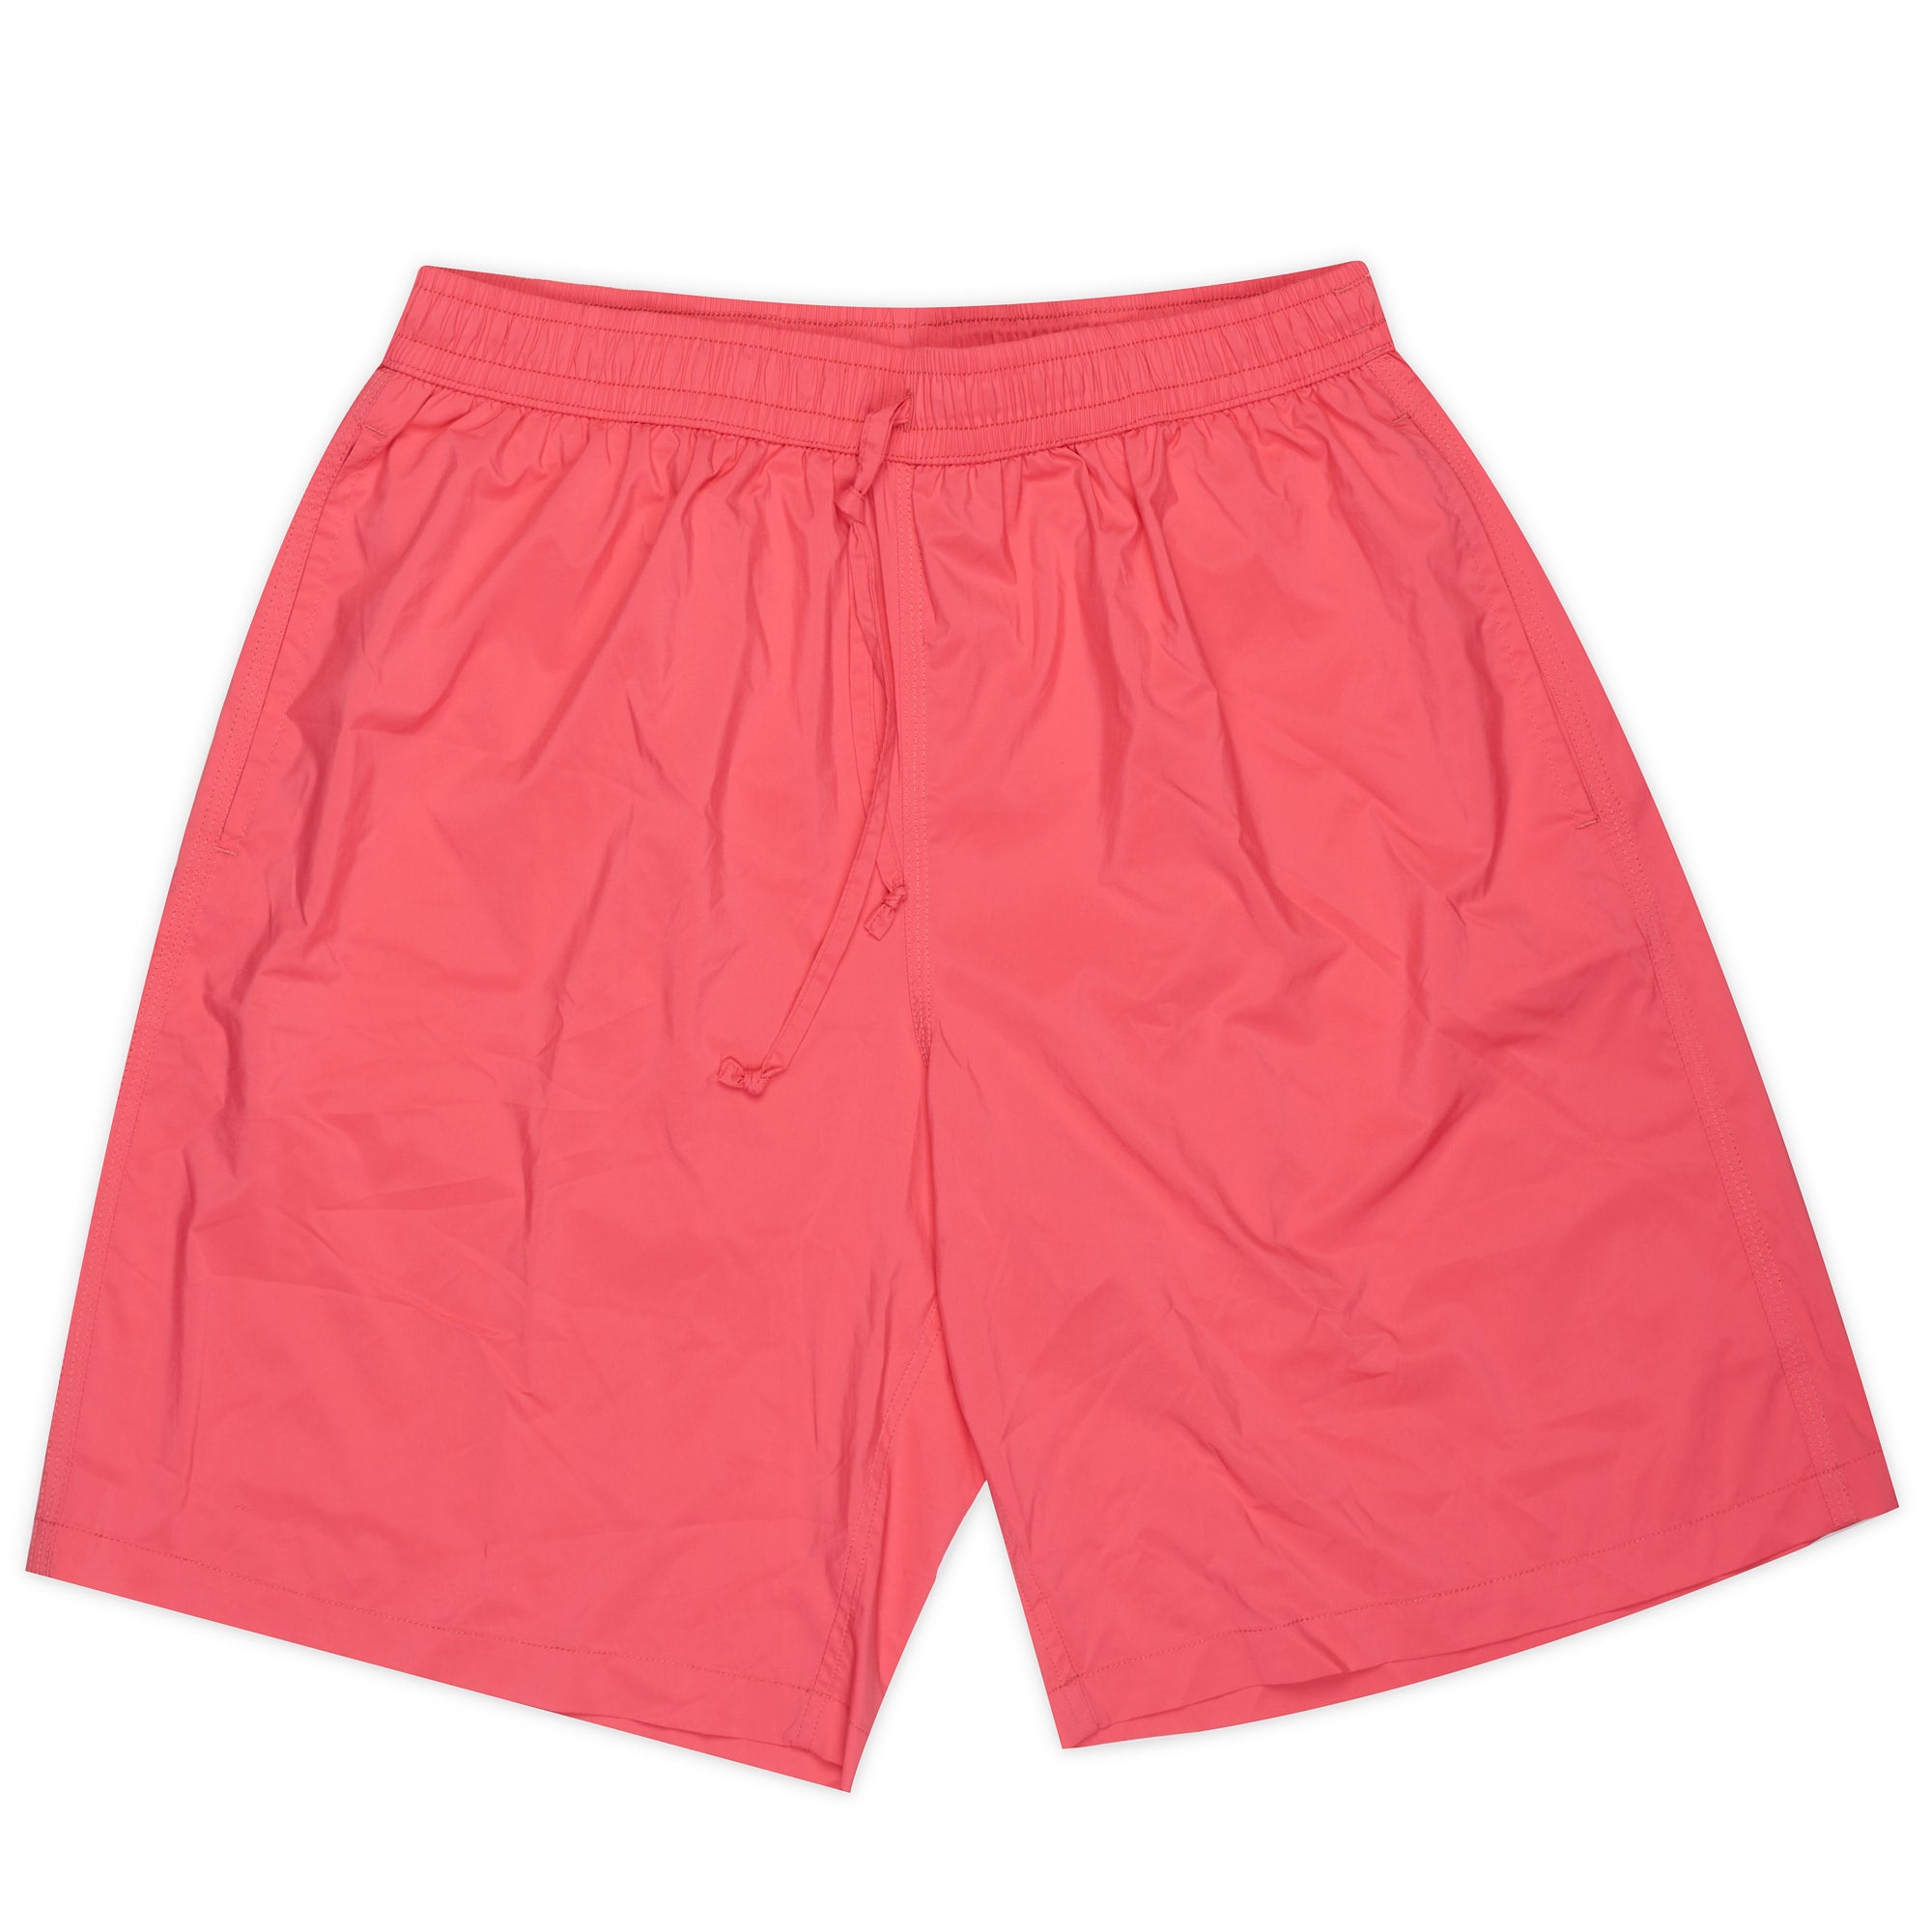 FEDELI Dark Pink Positano Airstop Swim Shorts Trunks NEW FEDELI